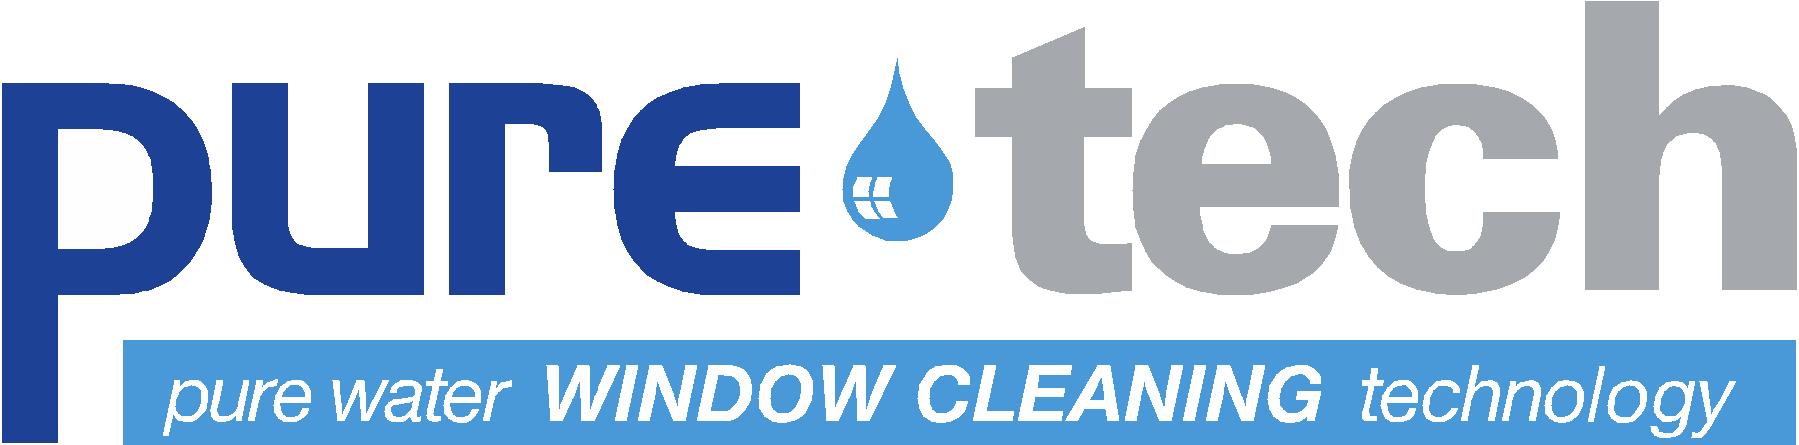 PureTech Window Cleaning